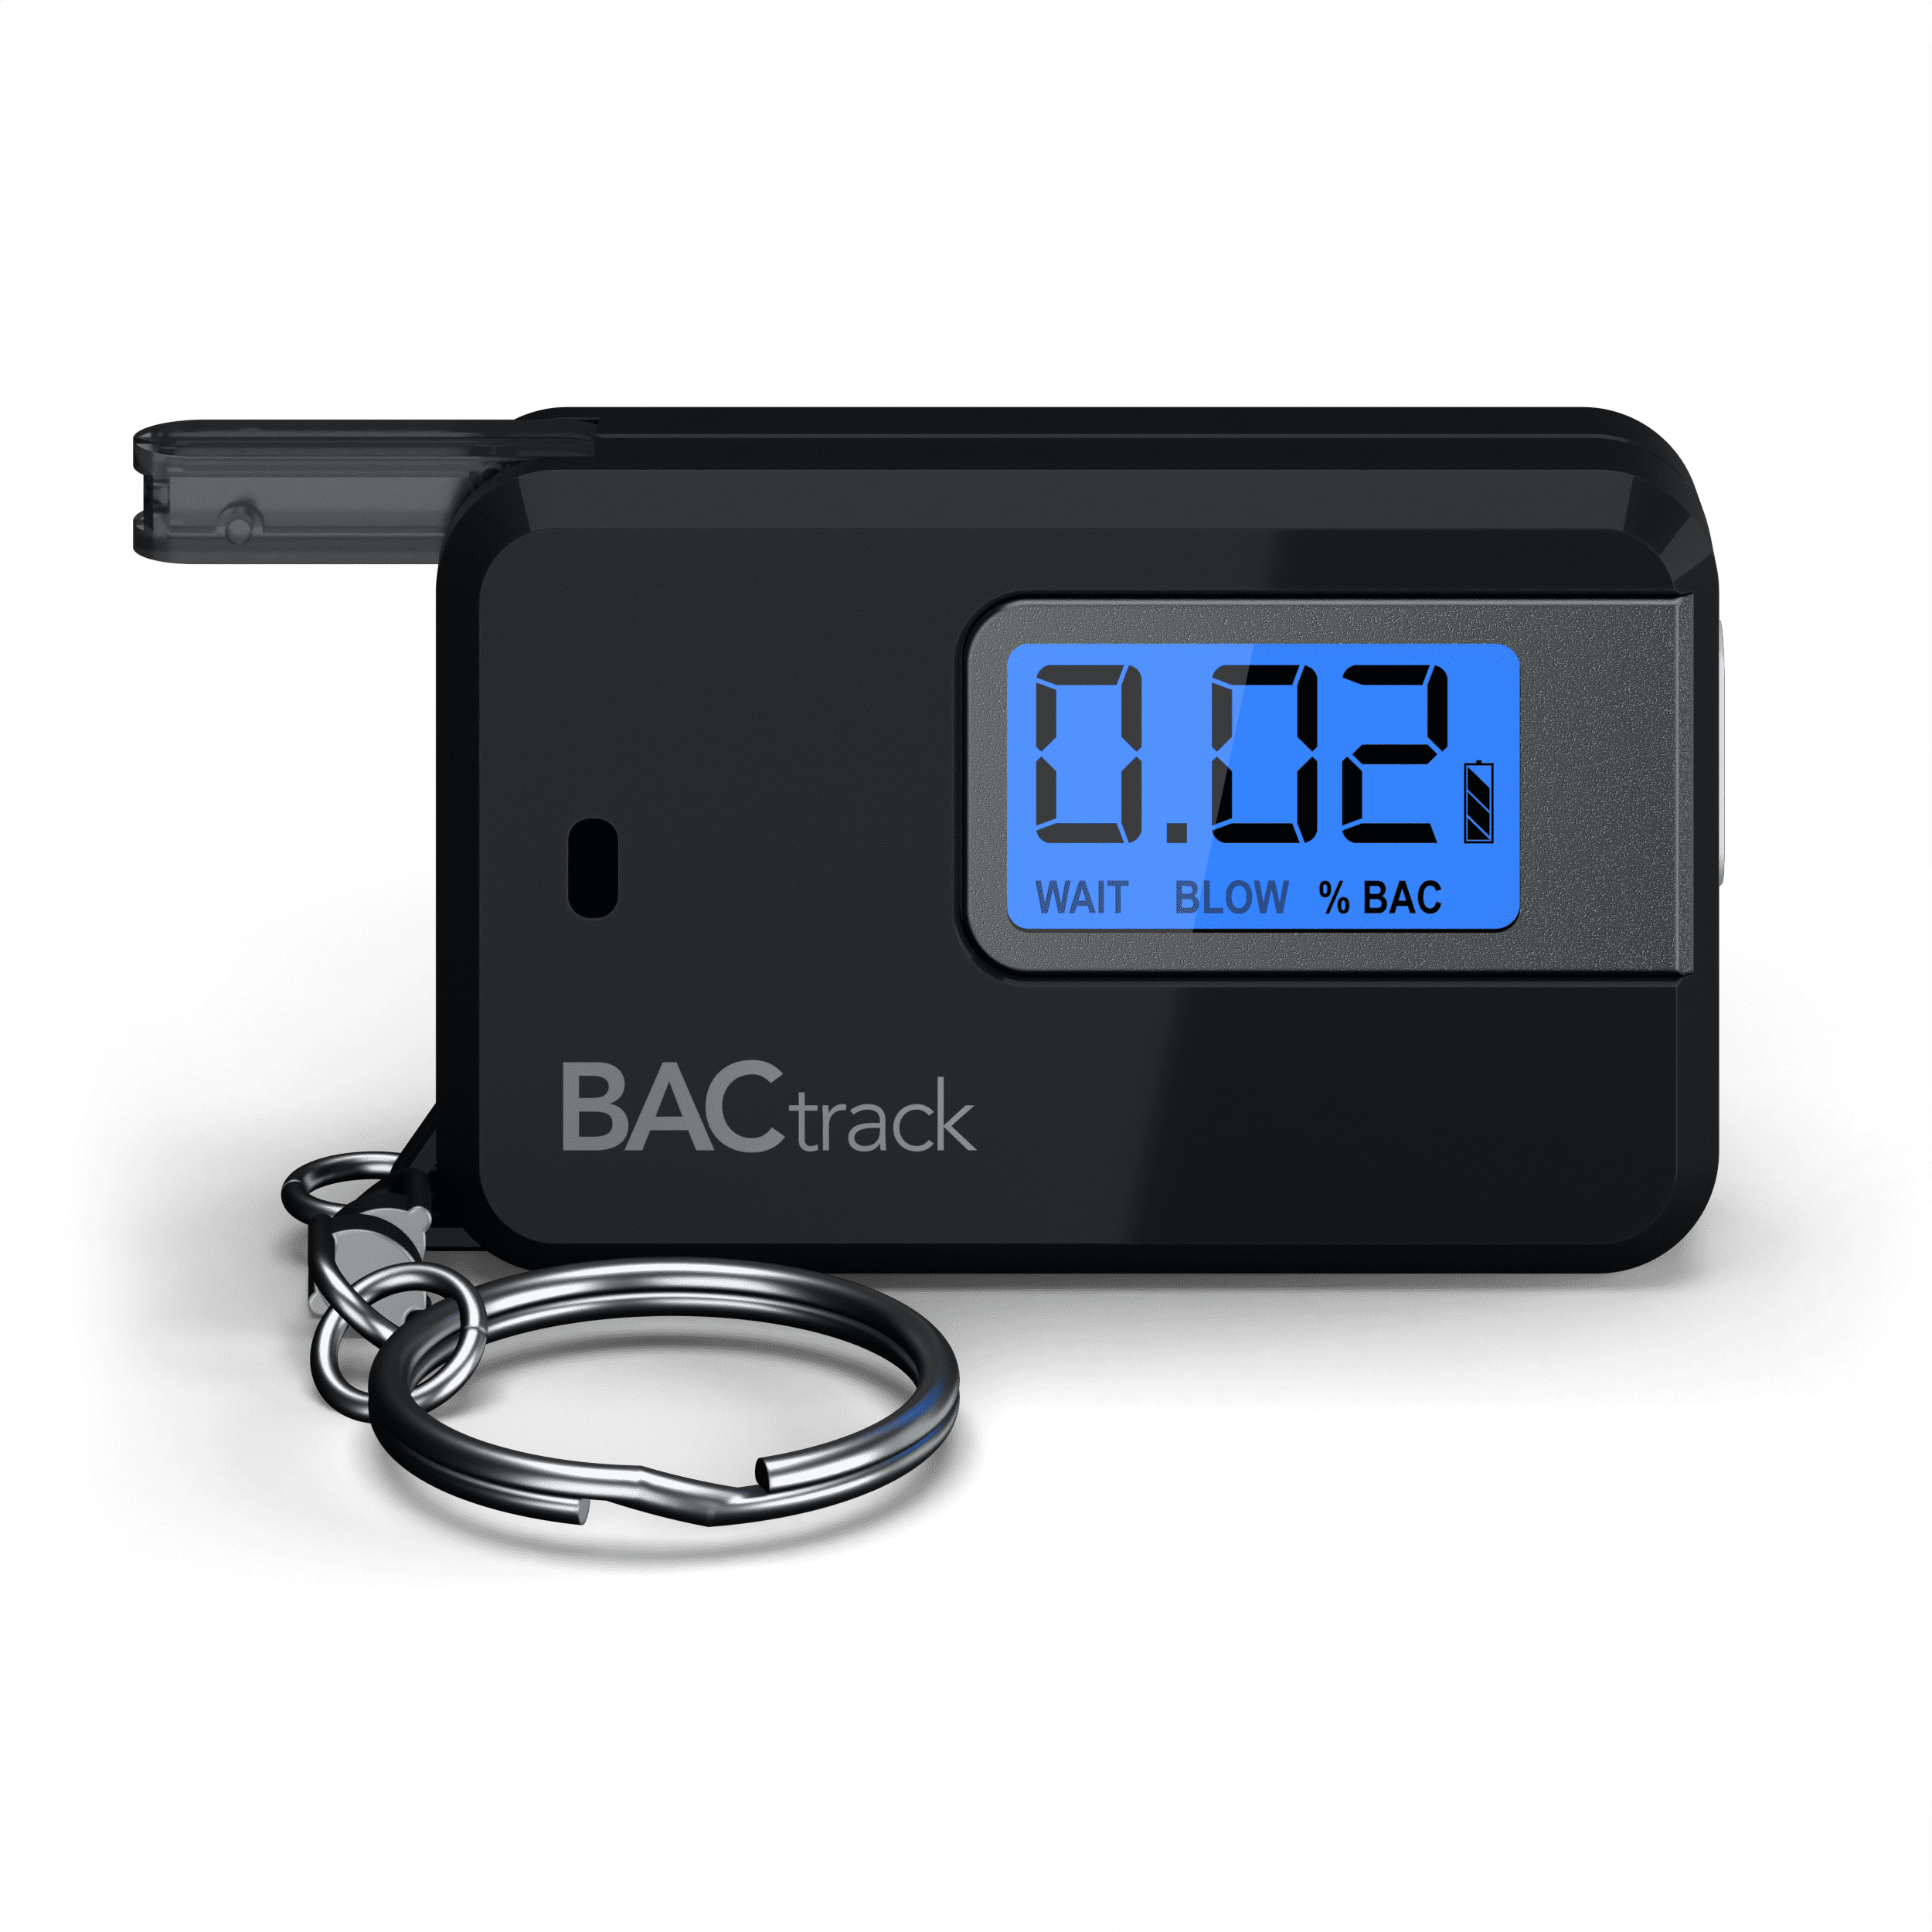 BACTRACK Go Portable Keychain Breathalyzer Personal Breath Alcohol Tester - Black